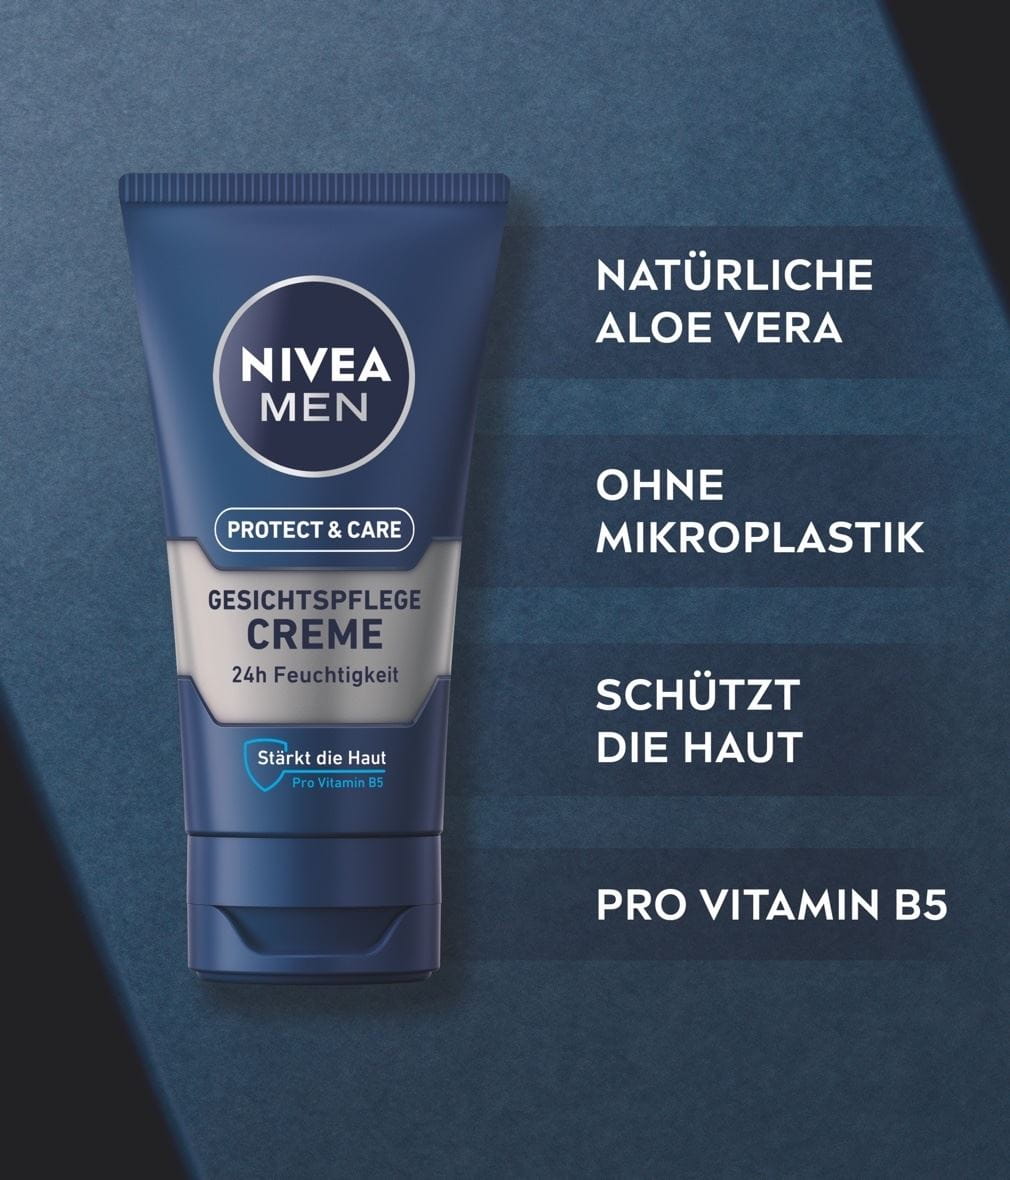 NIVEA MEN Protect & Care Gesichtspflege Creme Produktabbildung mit Benefits